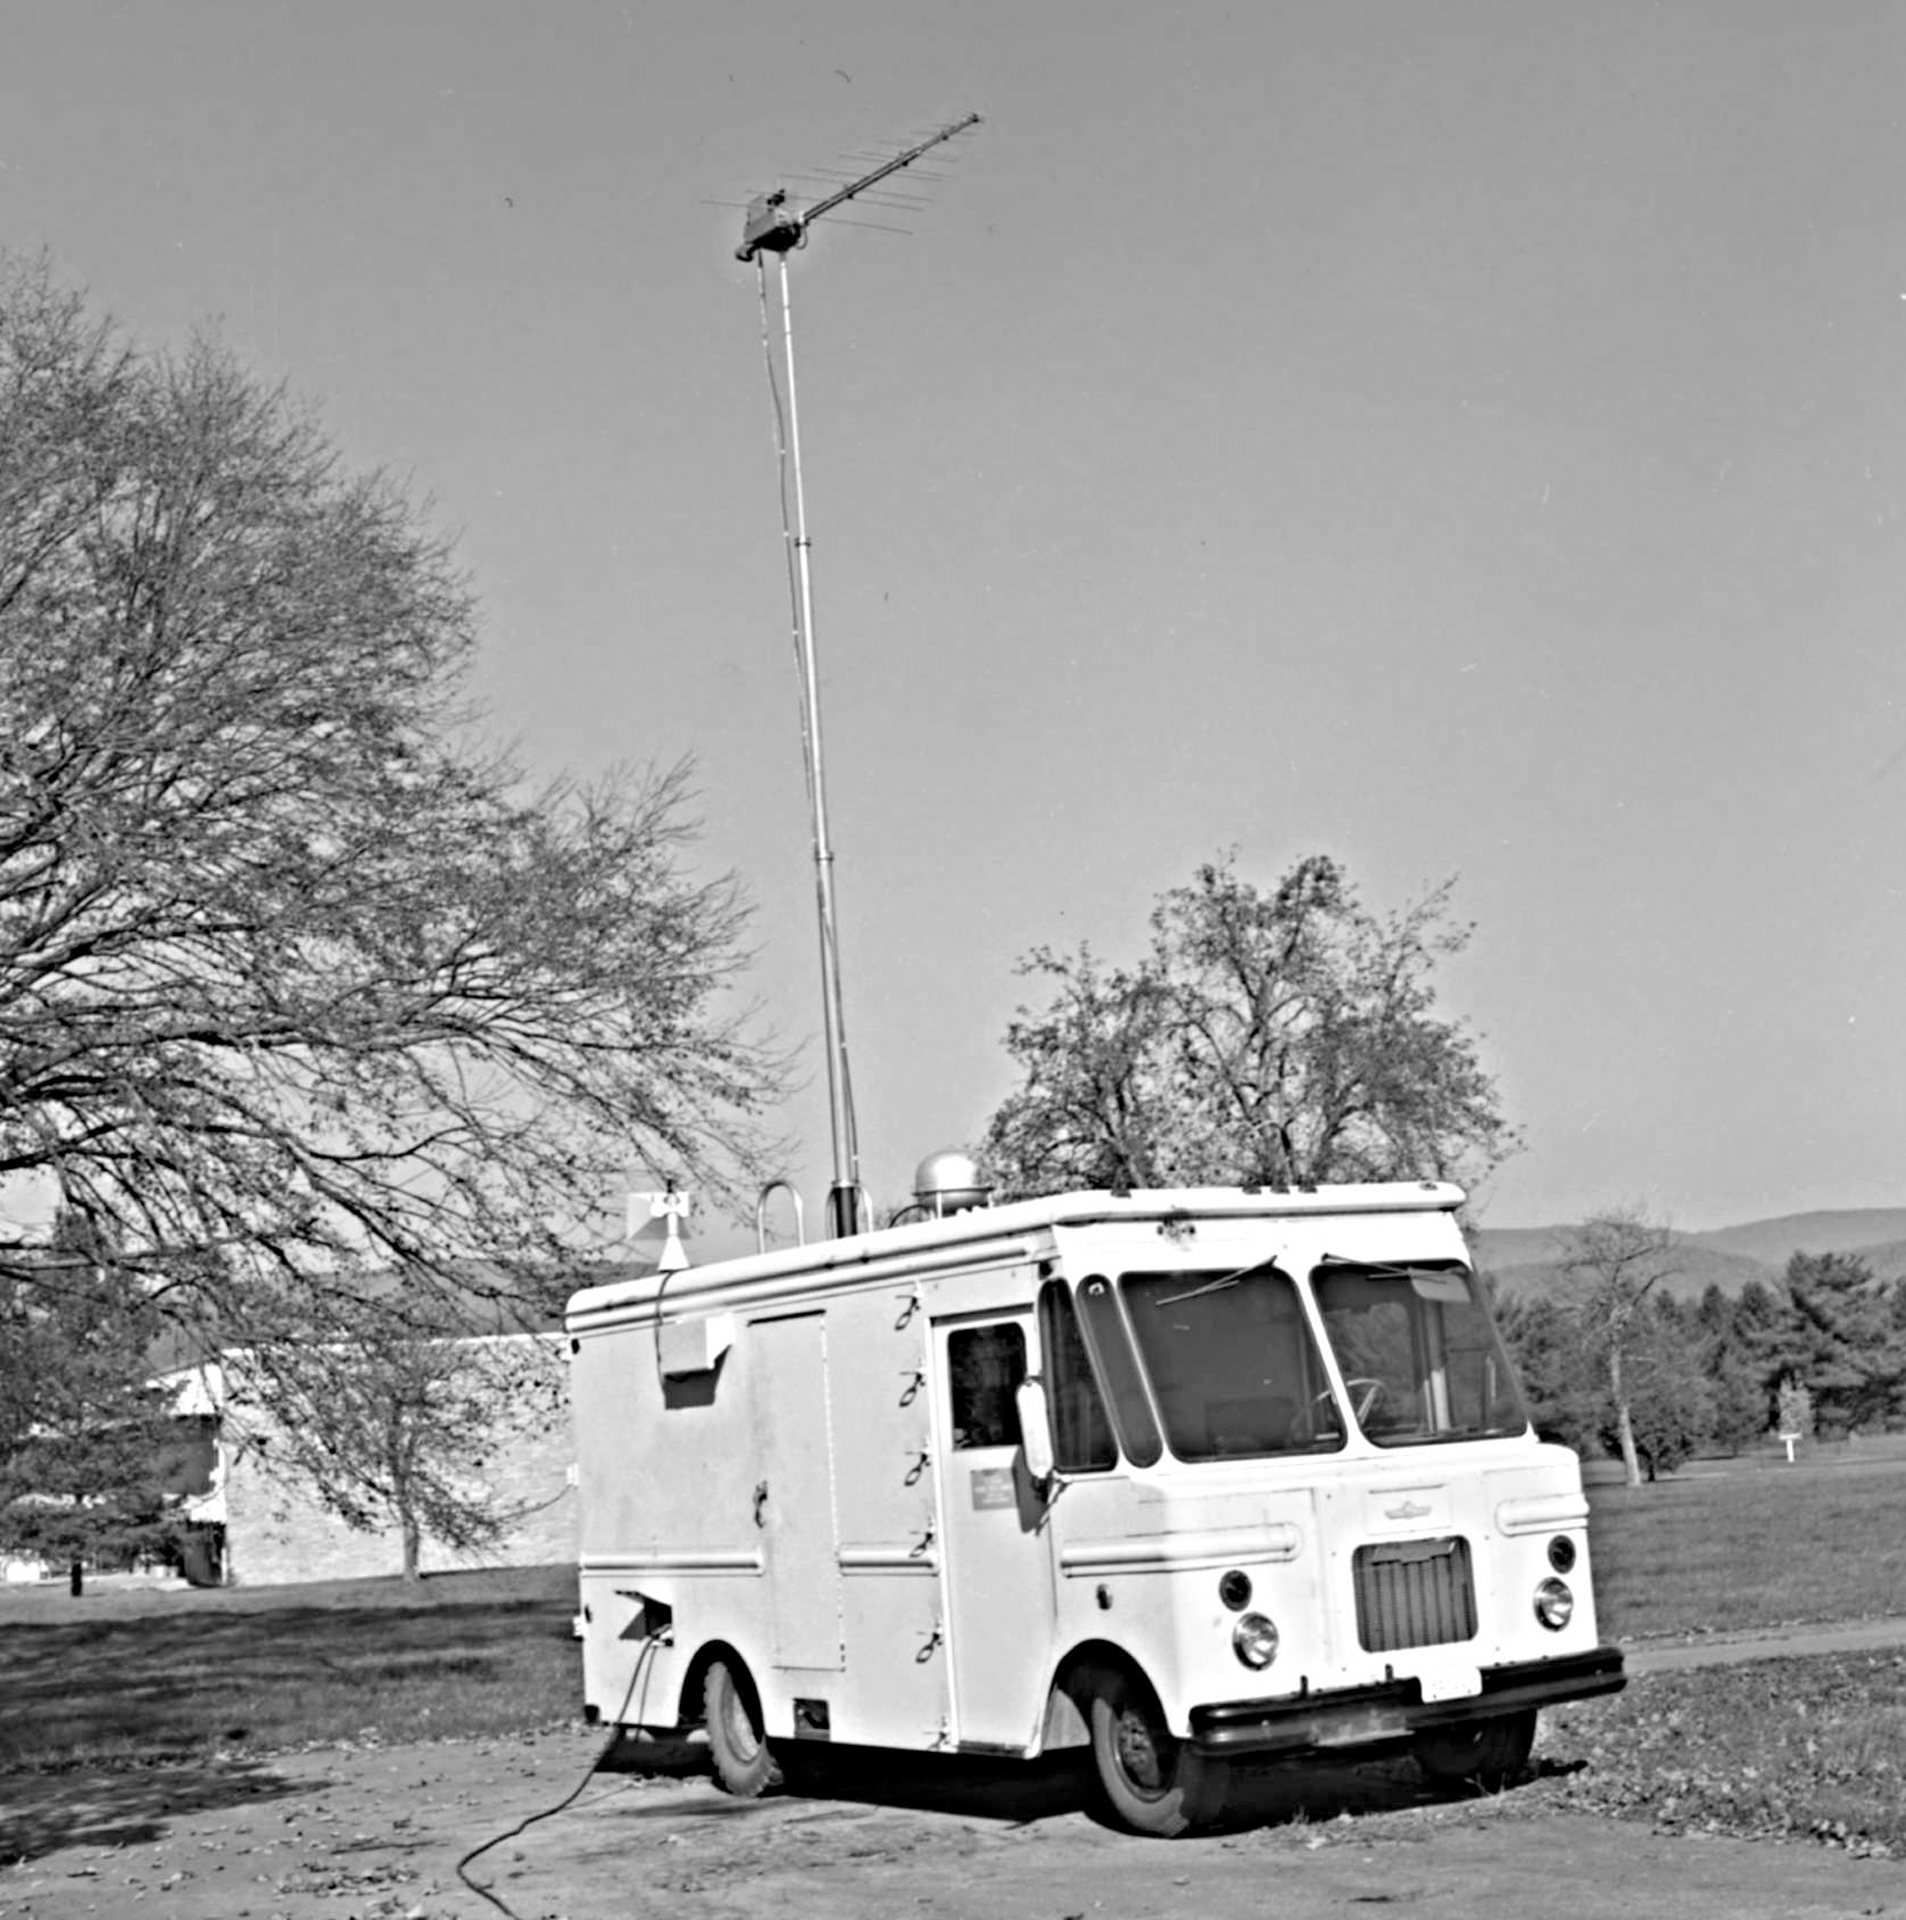 The RFI van in Green Bank